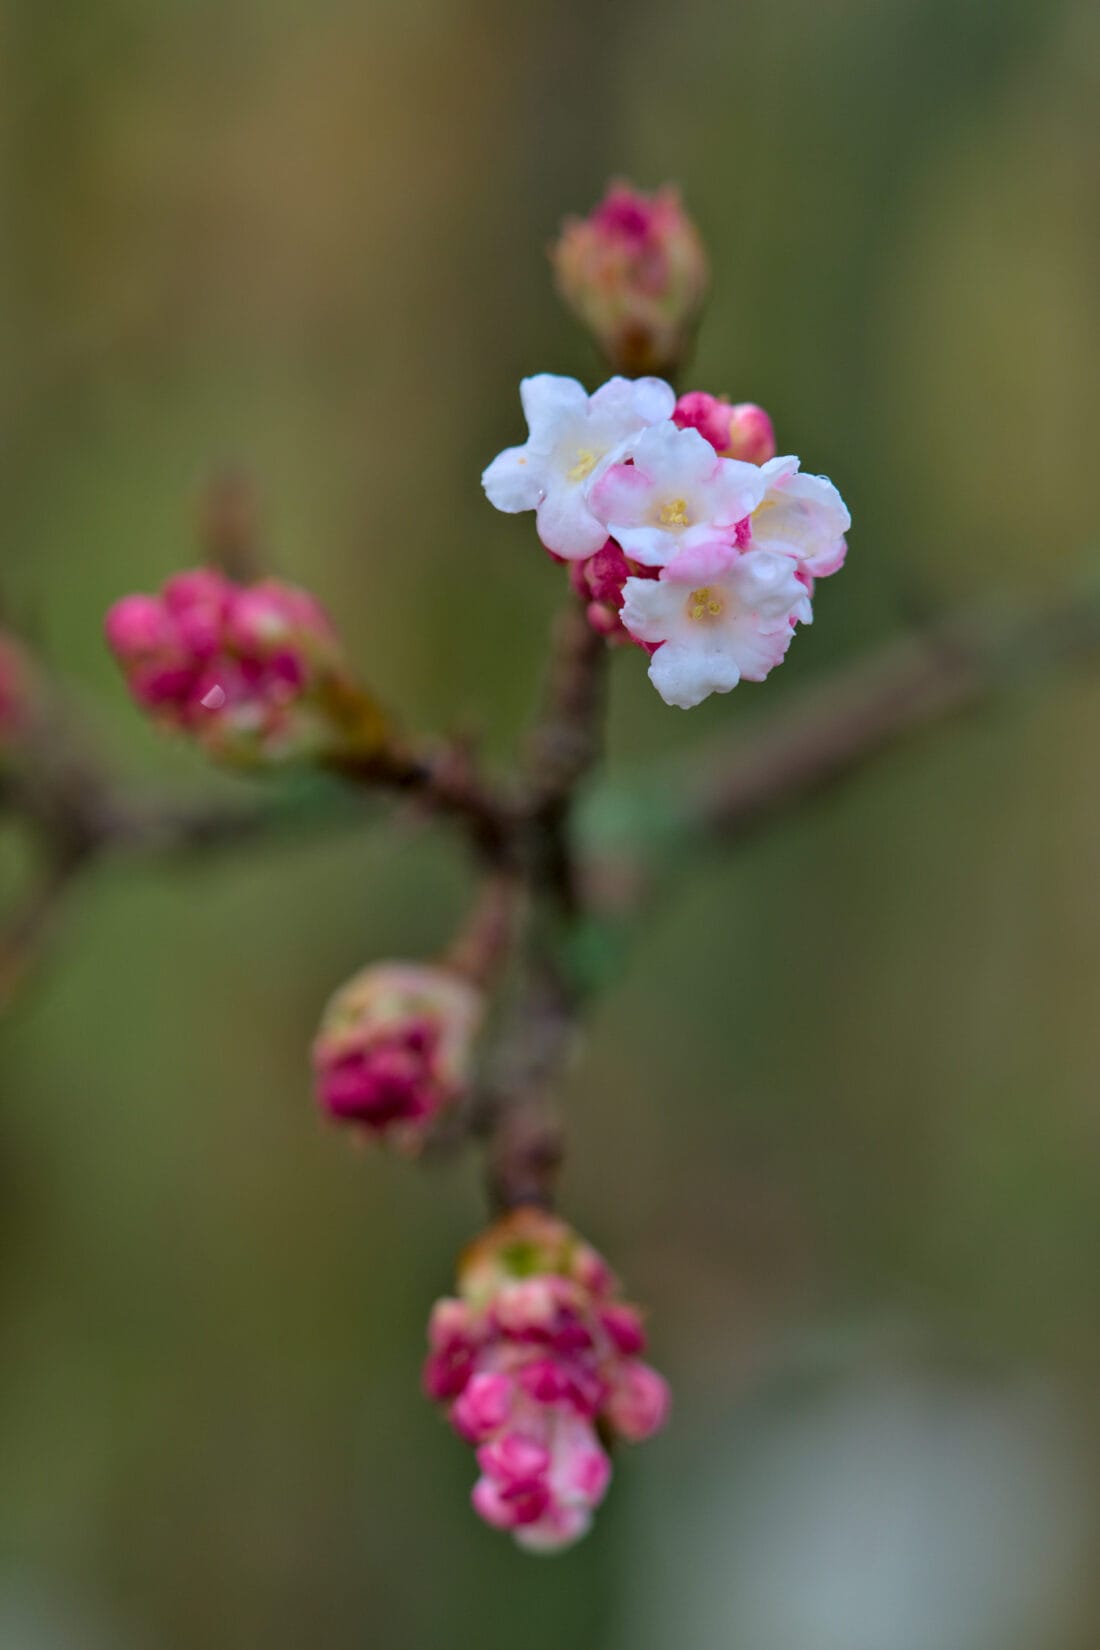 A close up of a pink flower on a branch. Viburnum bodnantense